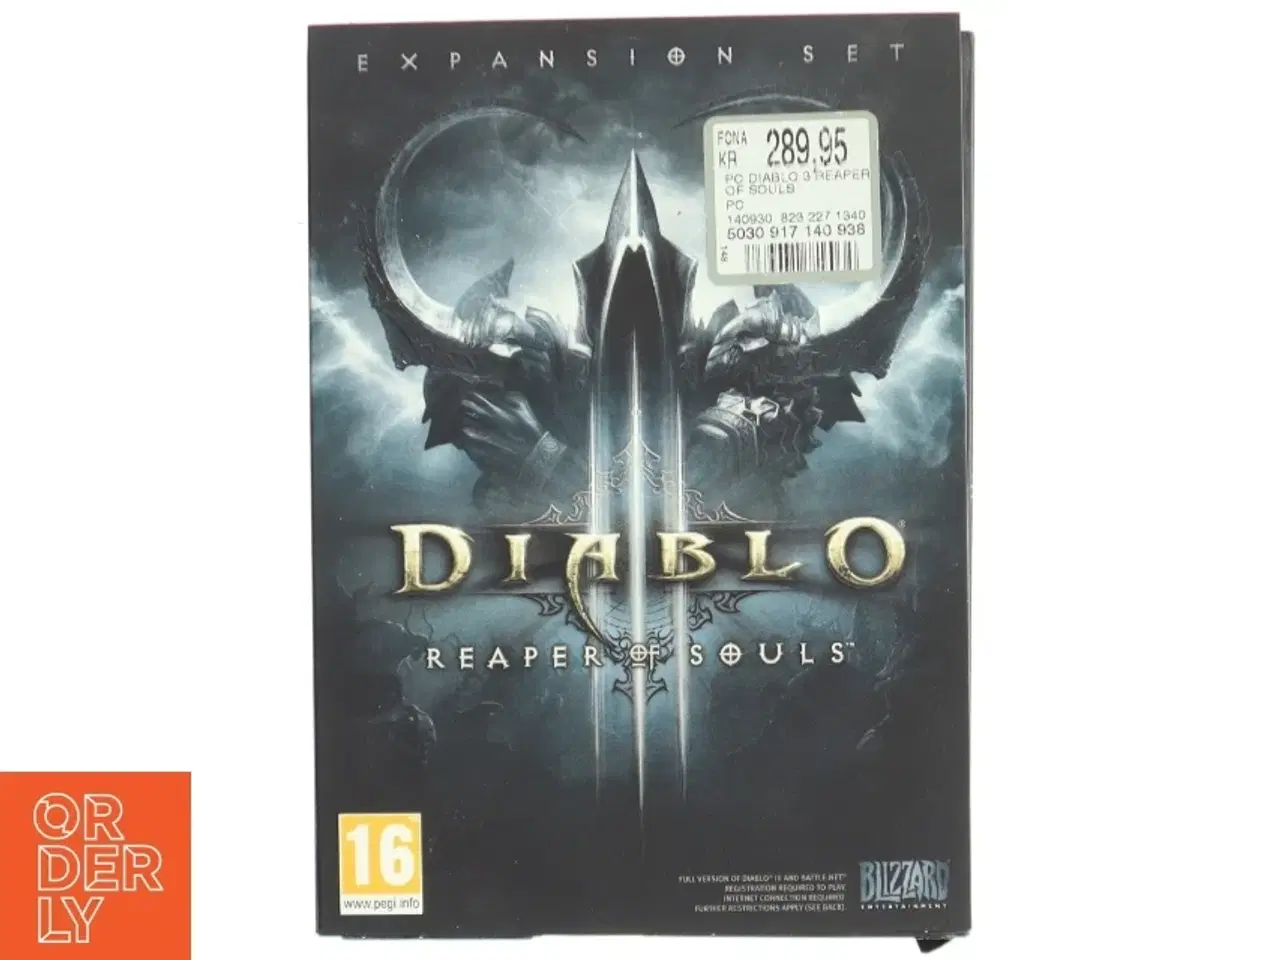 Billede 1 - Diablo III: Reaper of Souls Expansion Pack fra Blizzard Entertainment